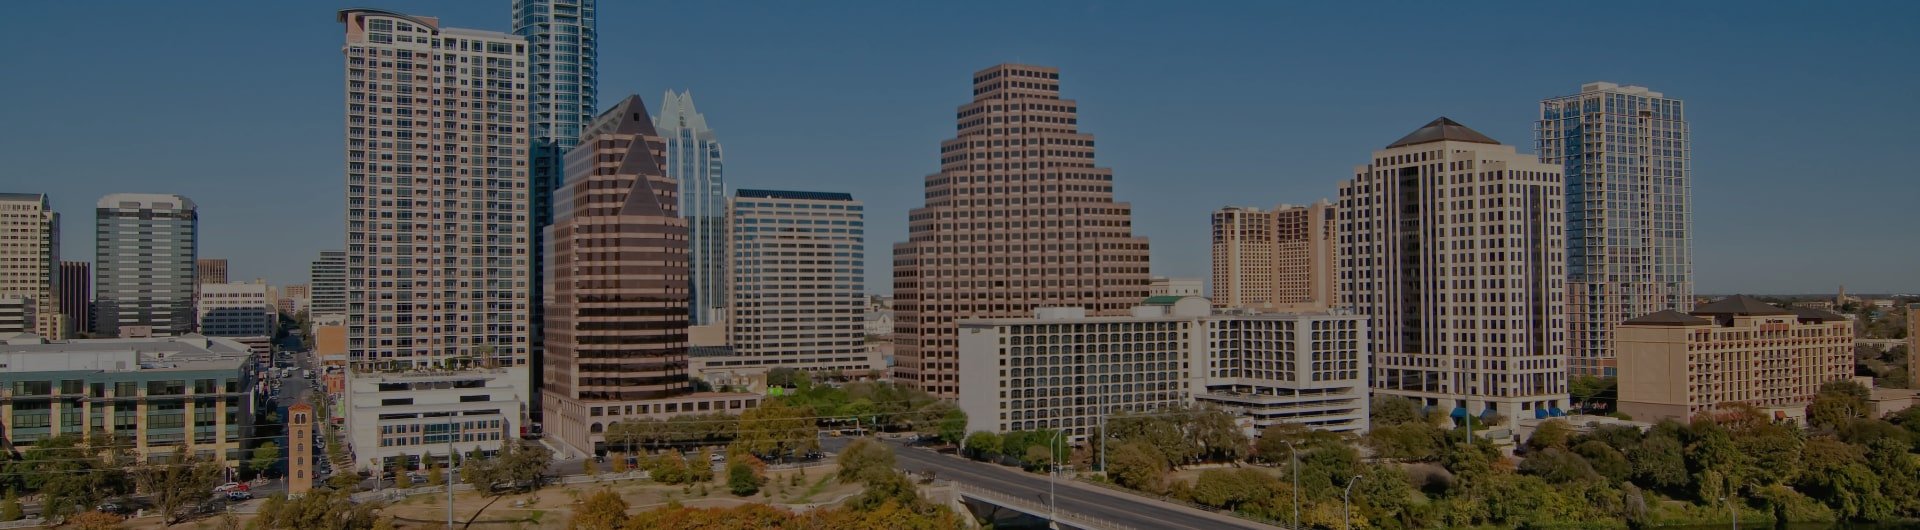 The Austin skyline district